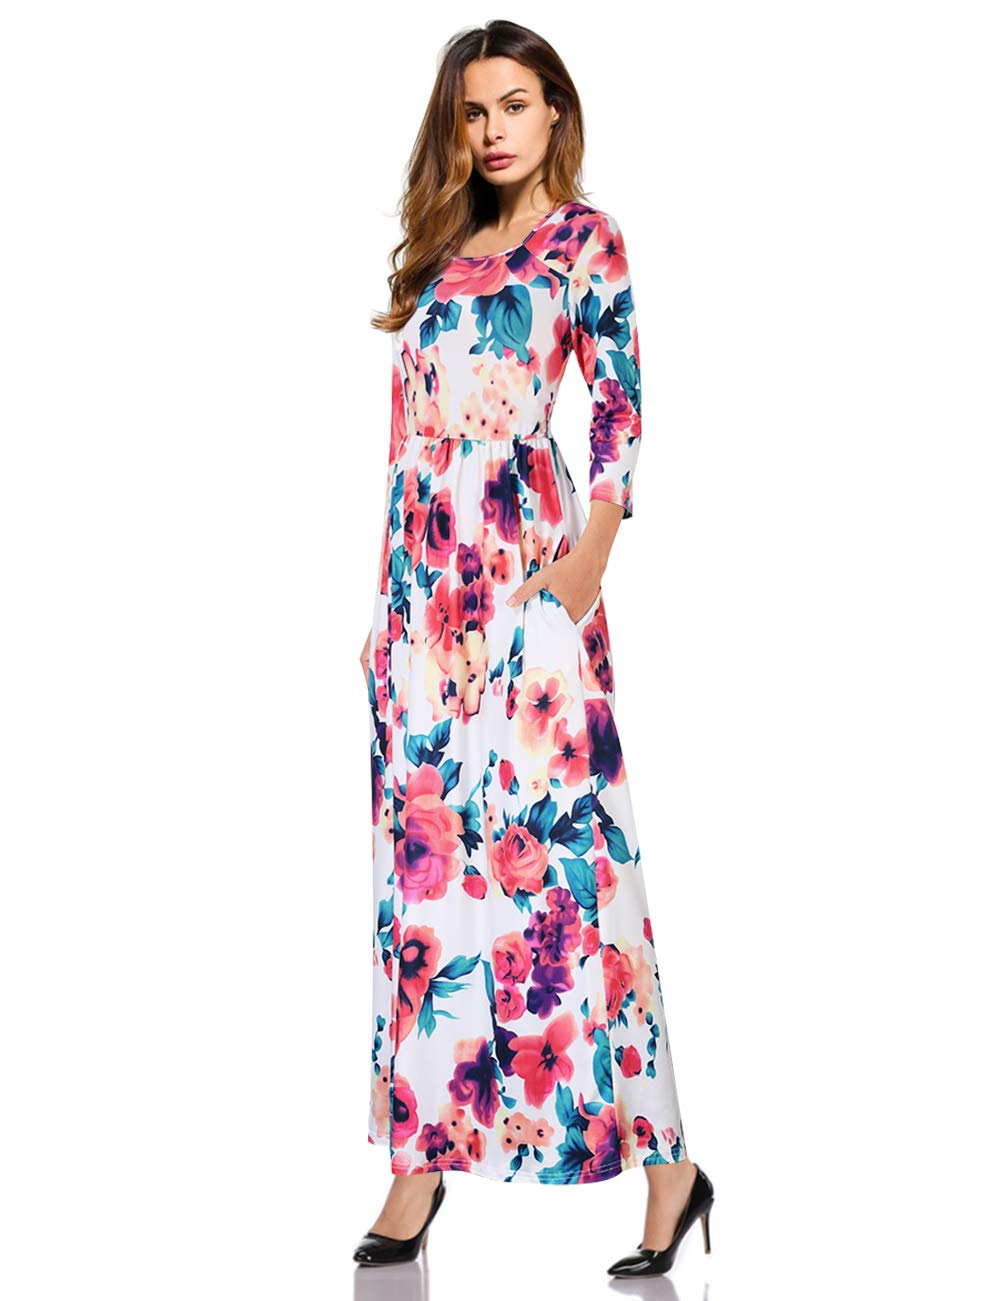 Women 3/4 Long Sleeve Floral Party Maxi Dress